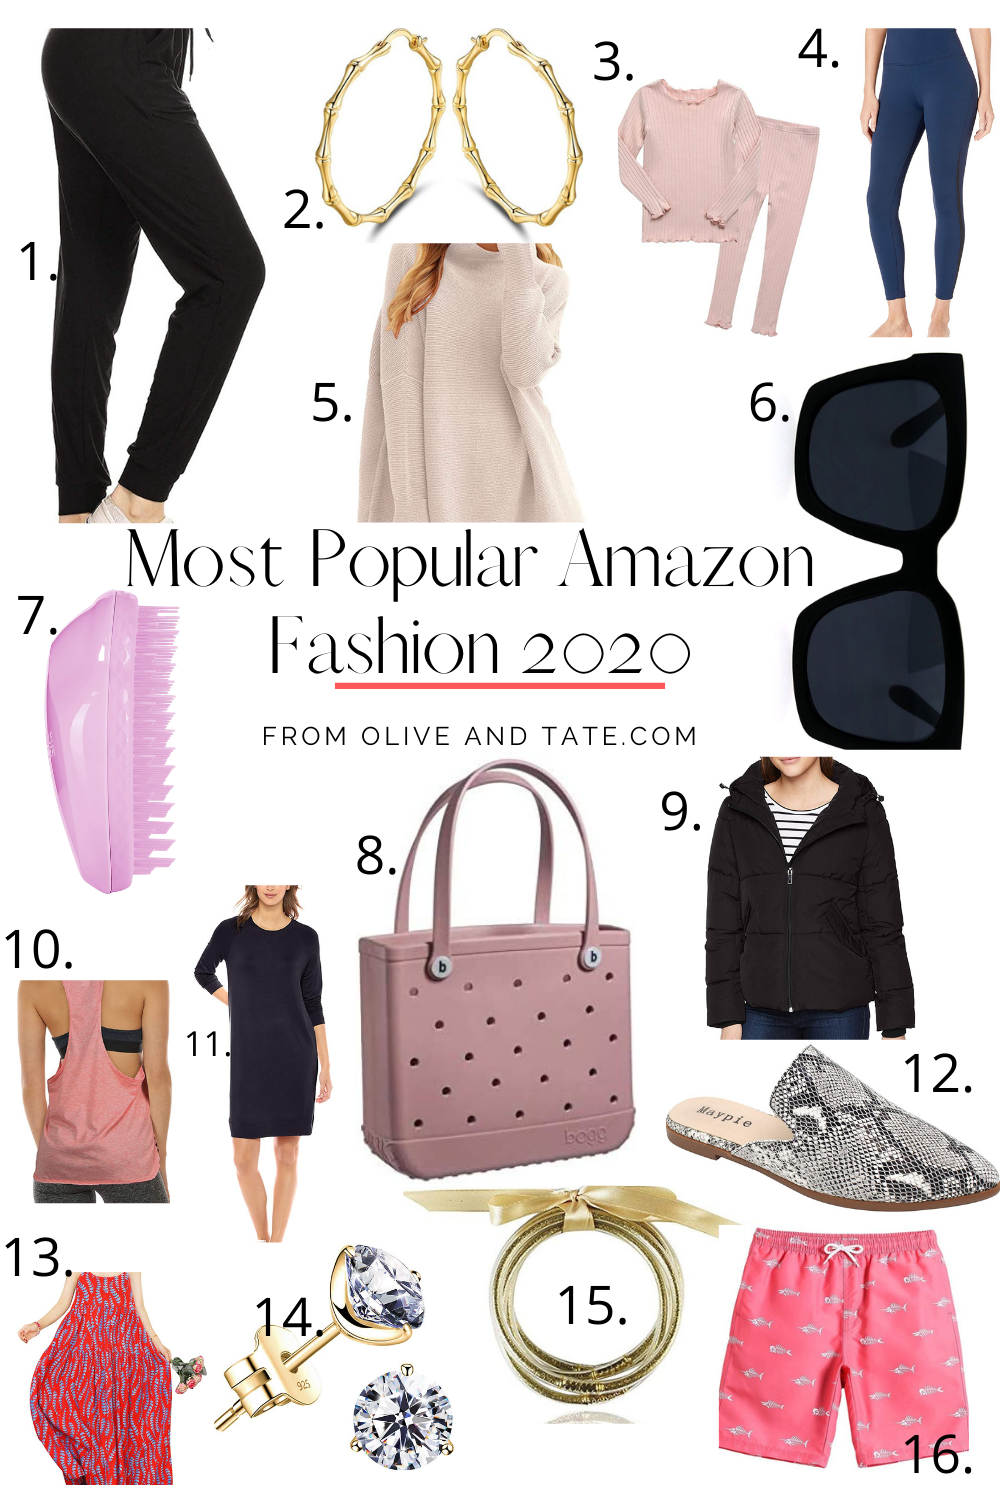 Amazon Fashion Most Popular 2020